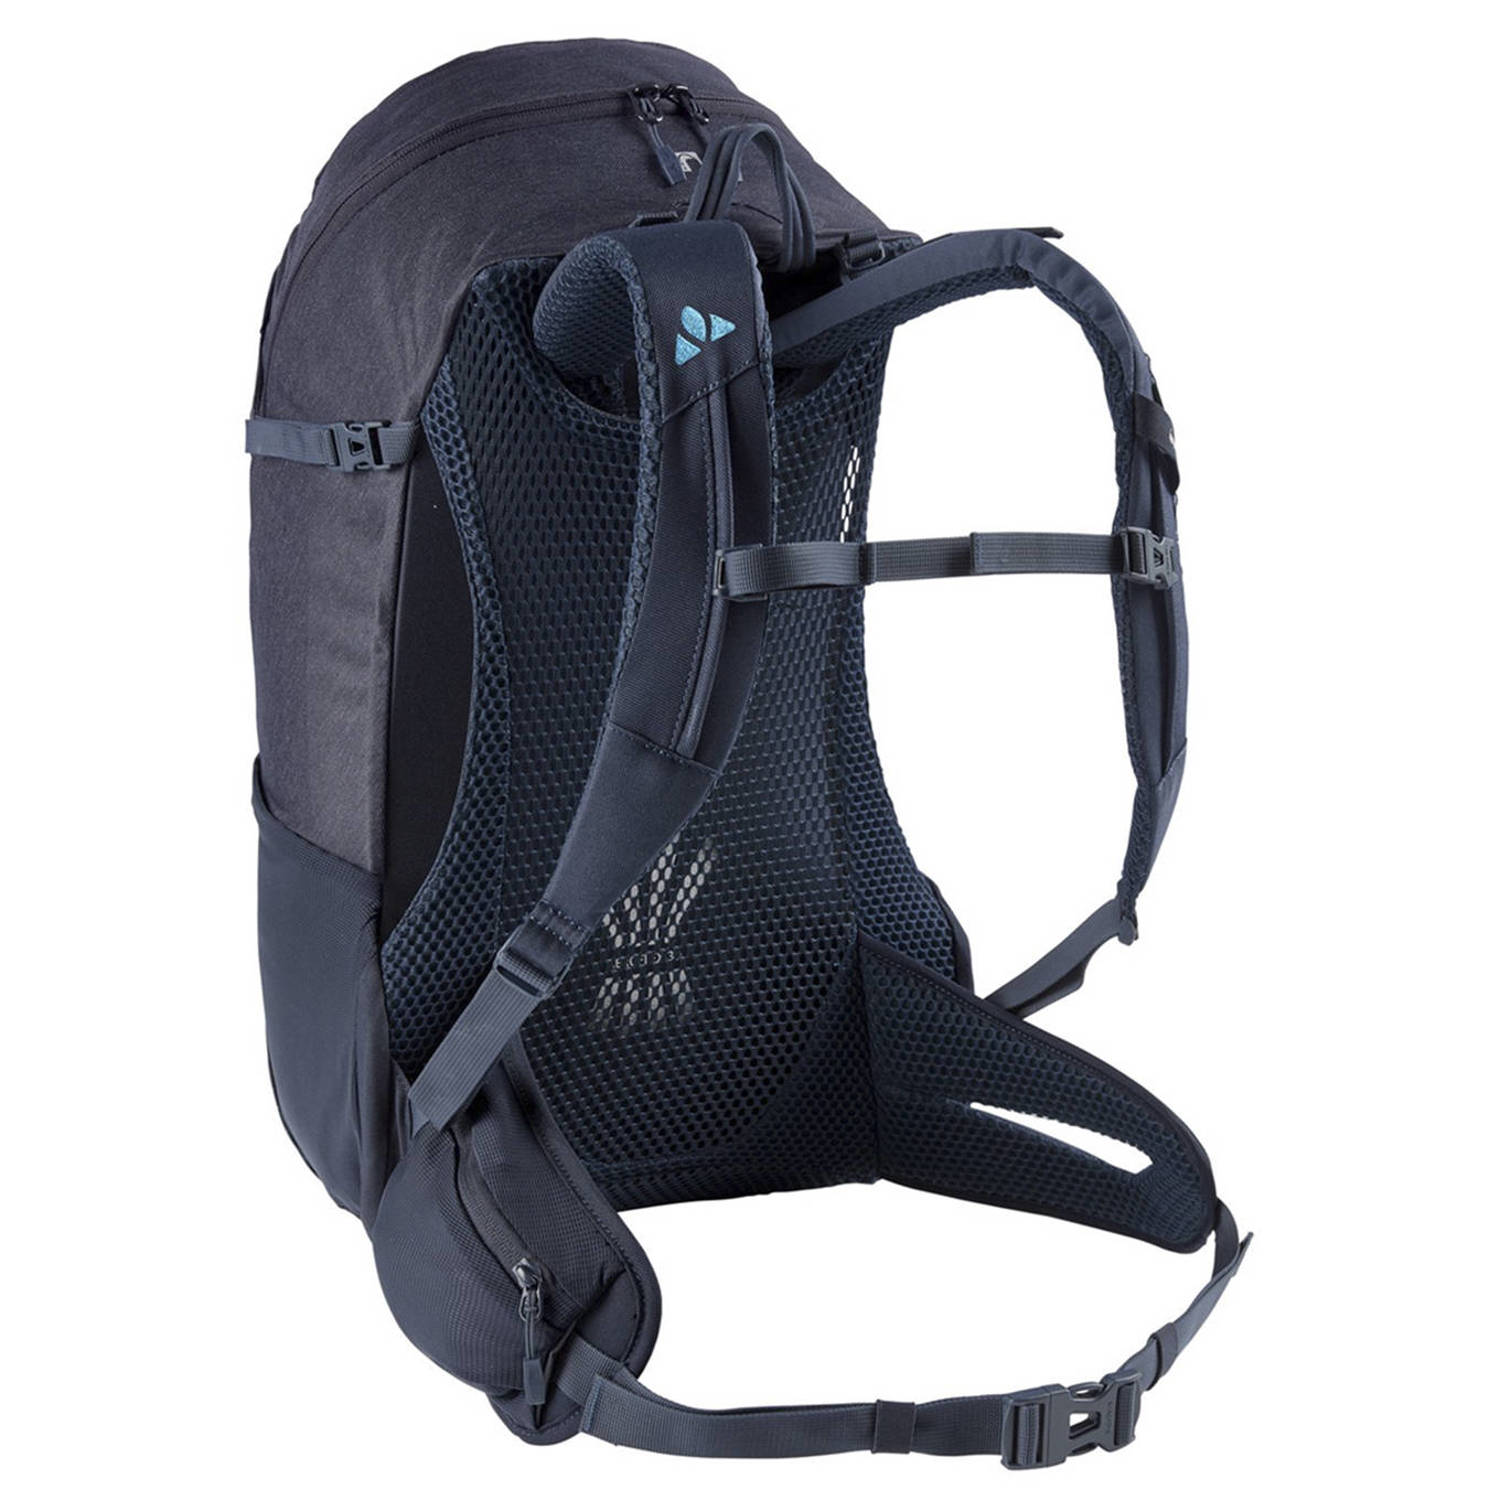 VAUDE backpack Tacora 22L donkerblauw